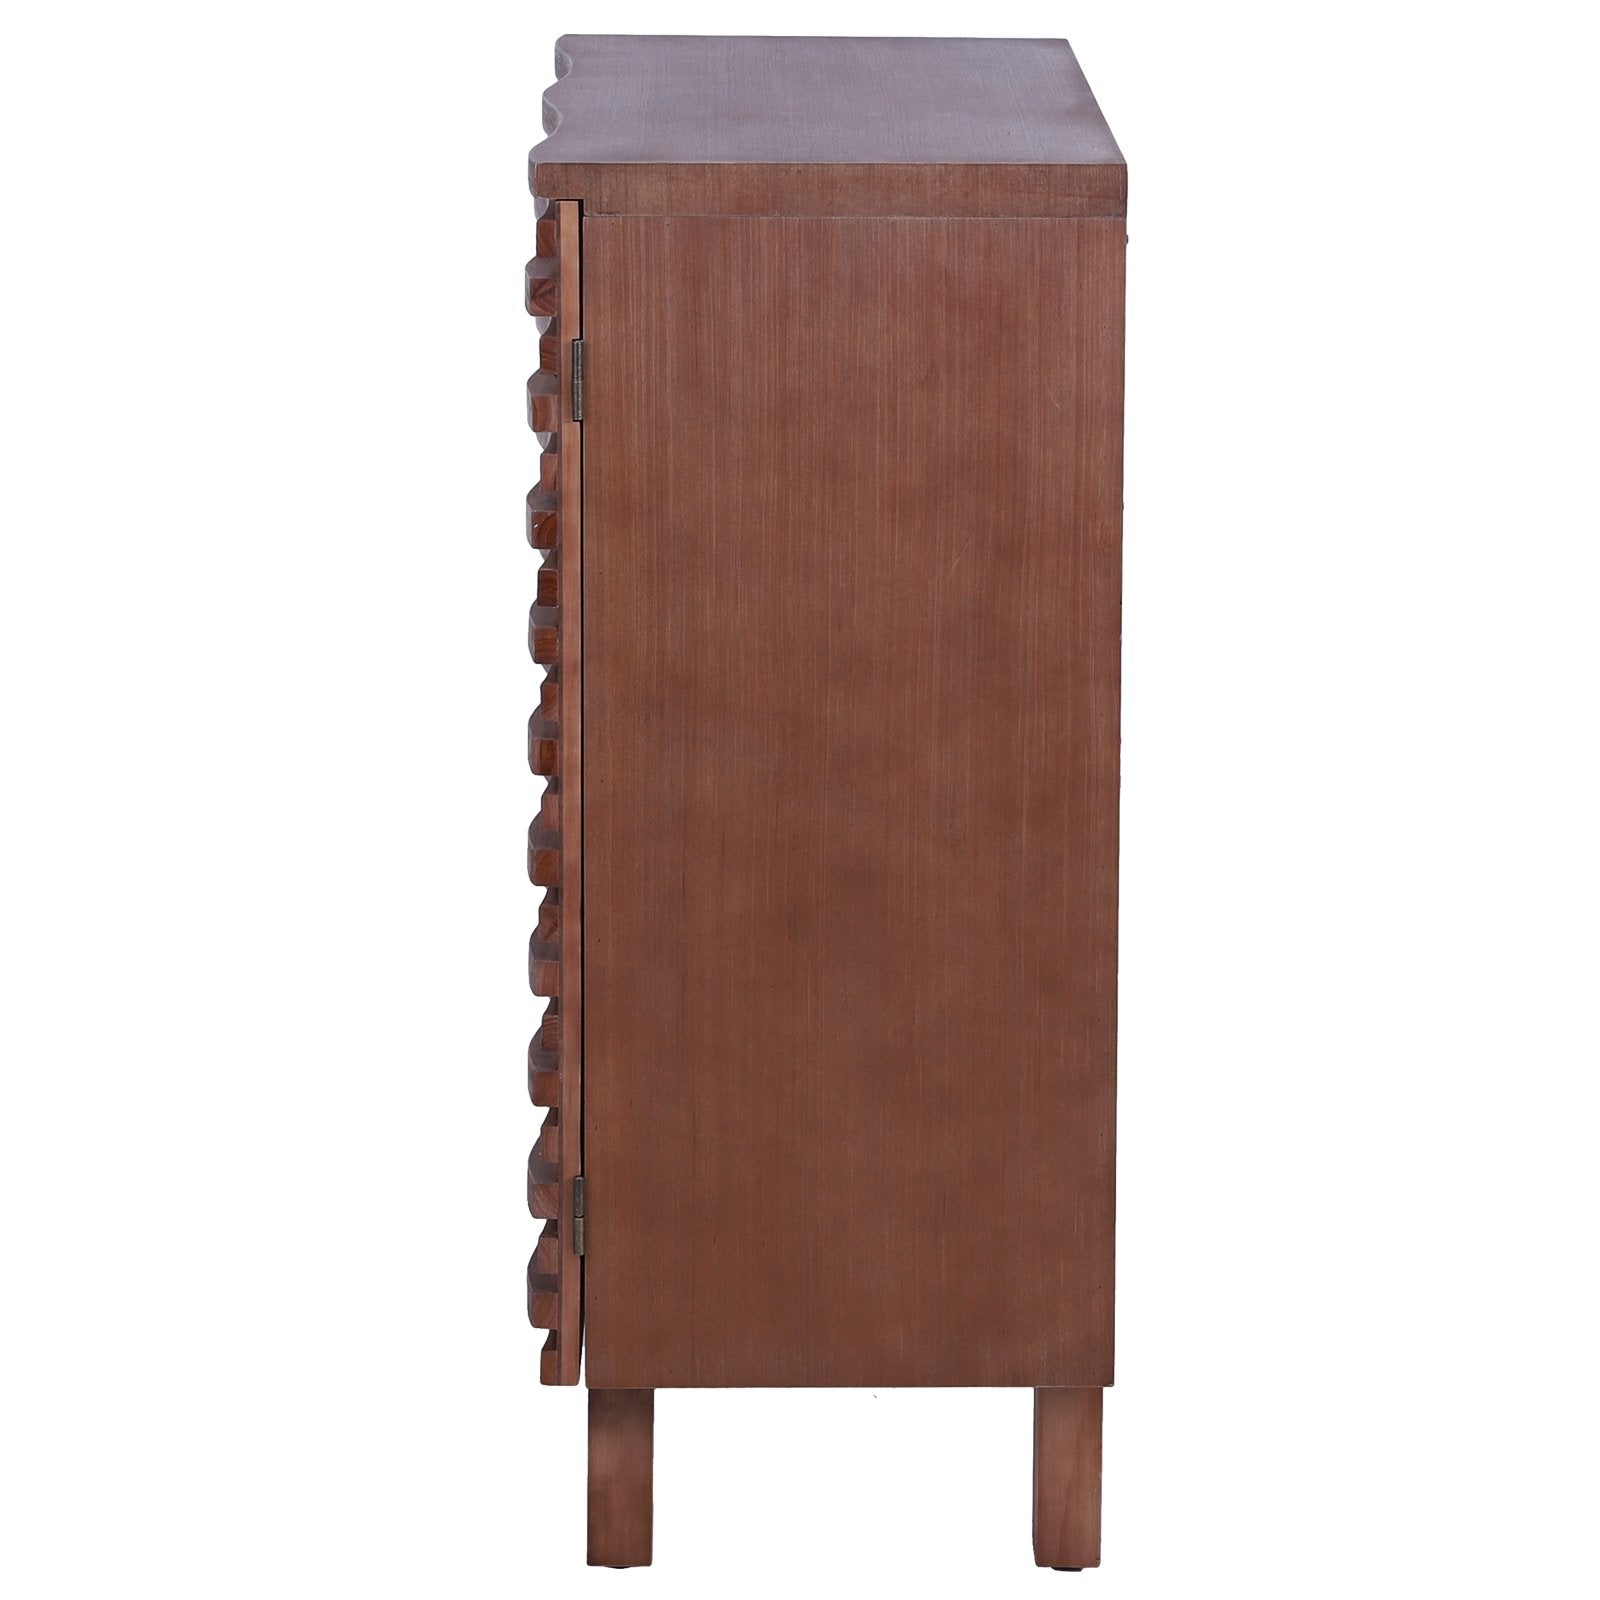 MFSTUDIO Farmhouse 2-Door Wave Wood Accent Storage Cabinet